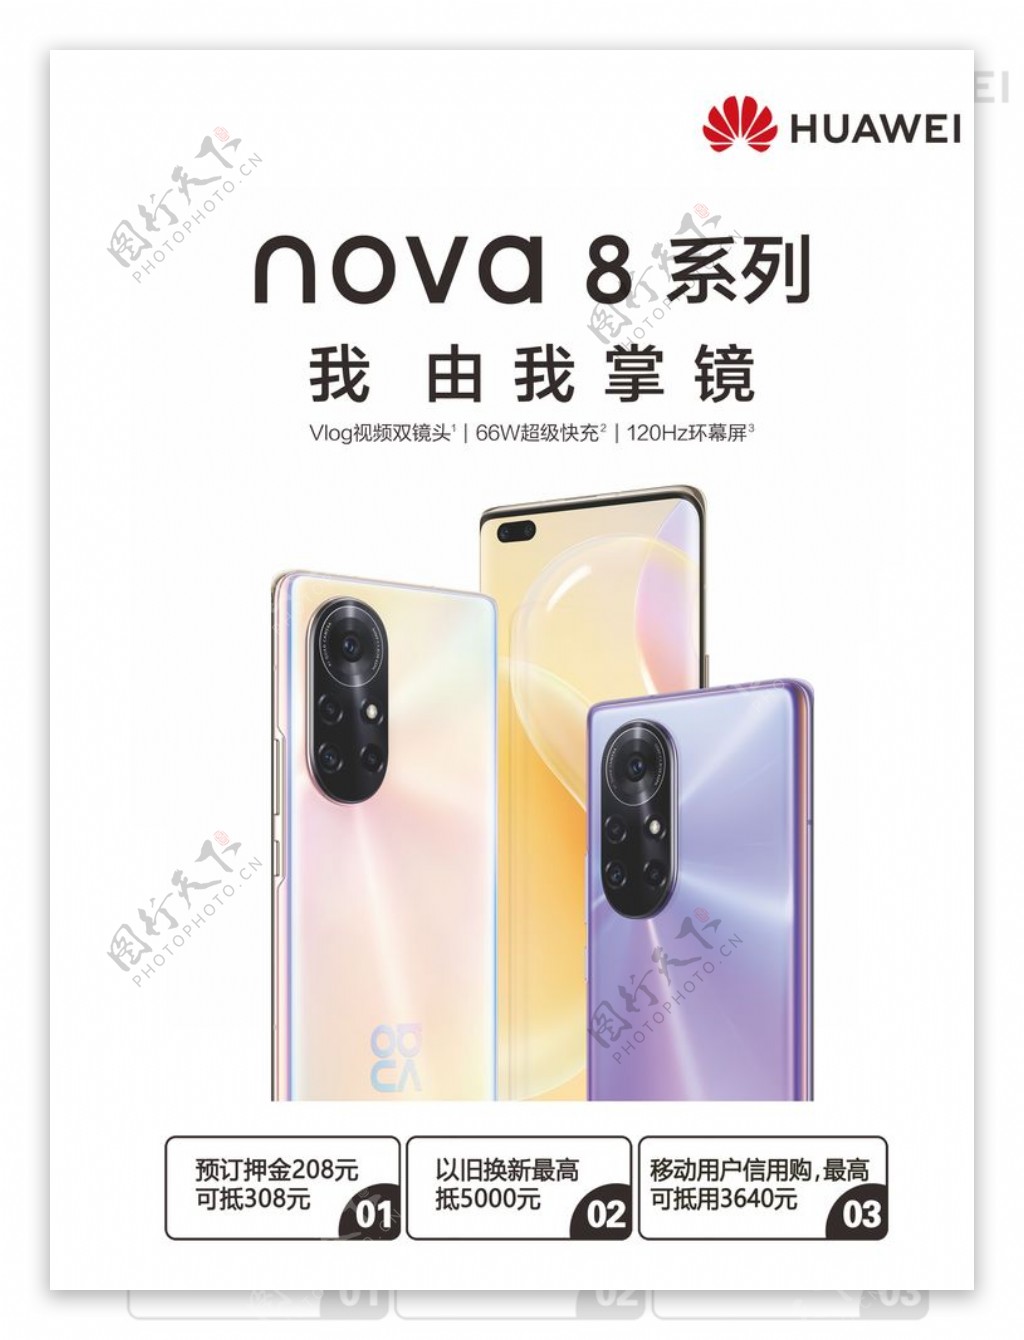 Nova8新品上市图片